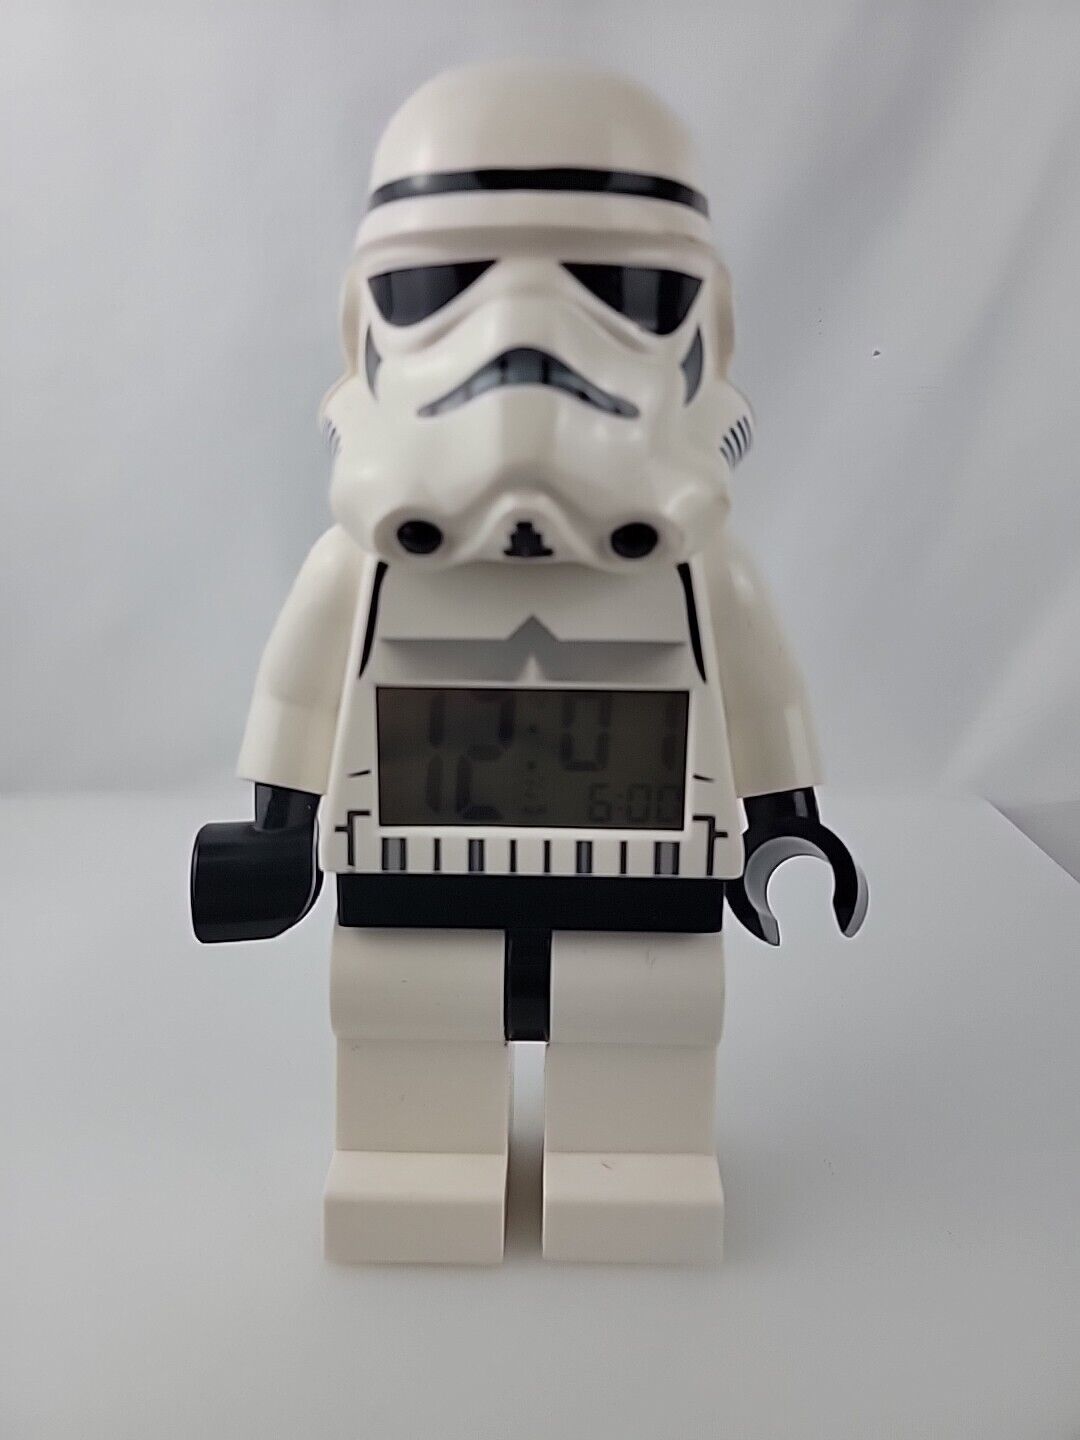 LEGO Star Wars Storm Trooper Digital Alarm Clock Minifigure 